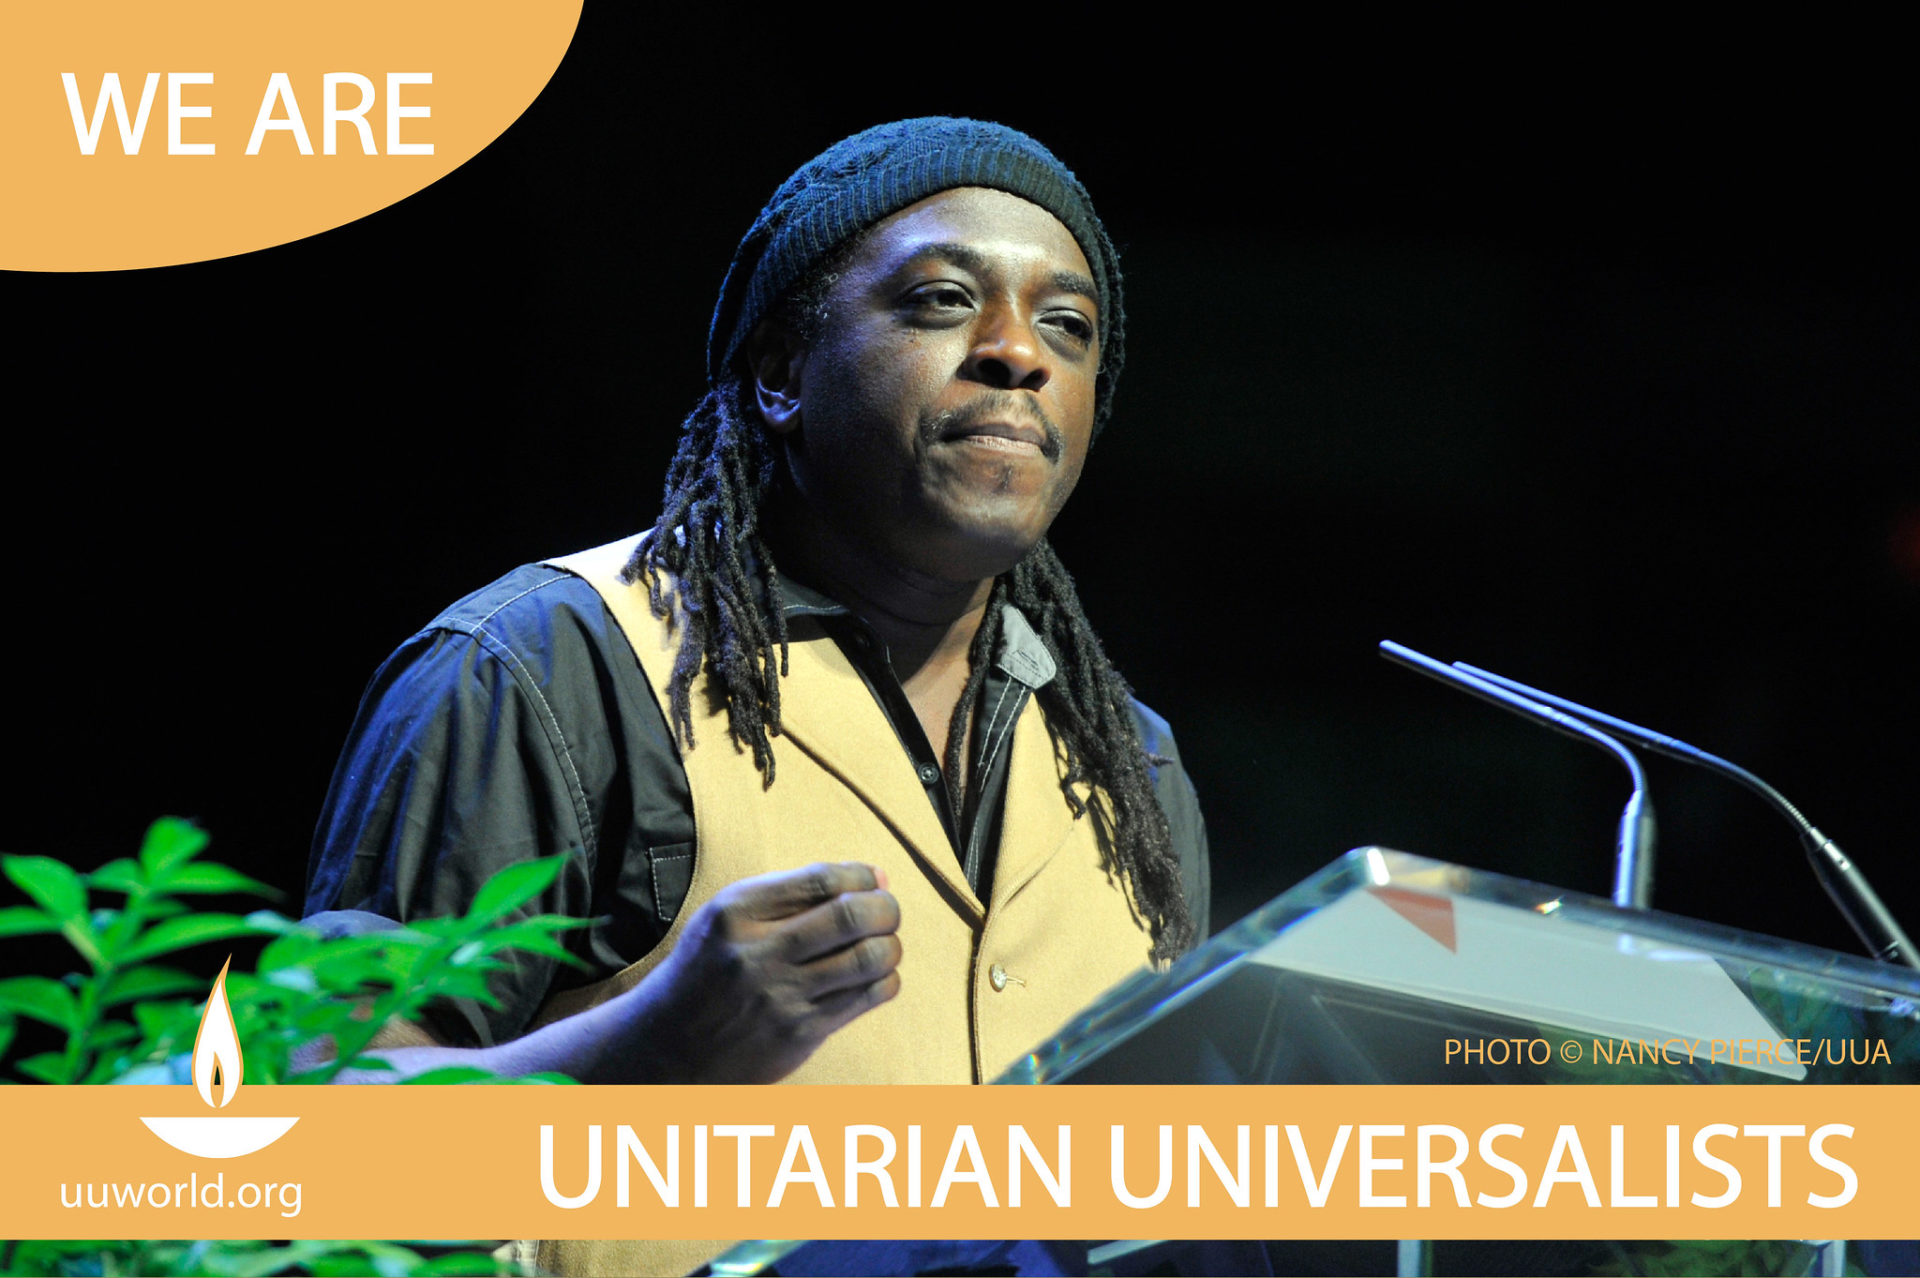 We are Unitarian Universalists